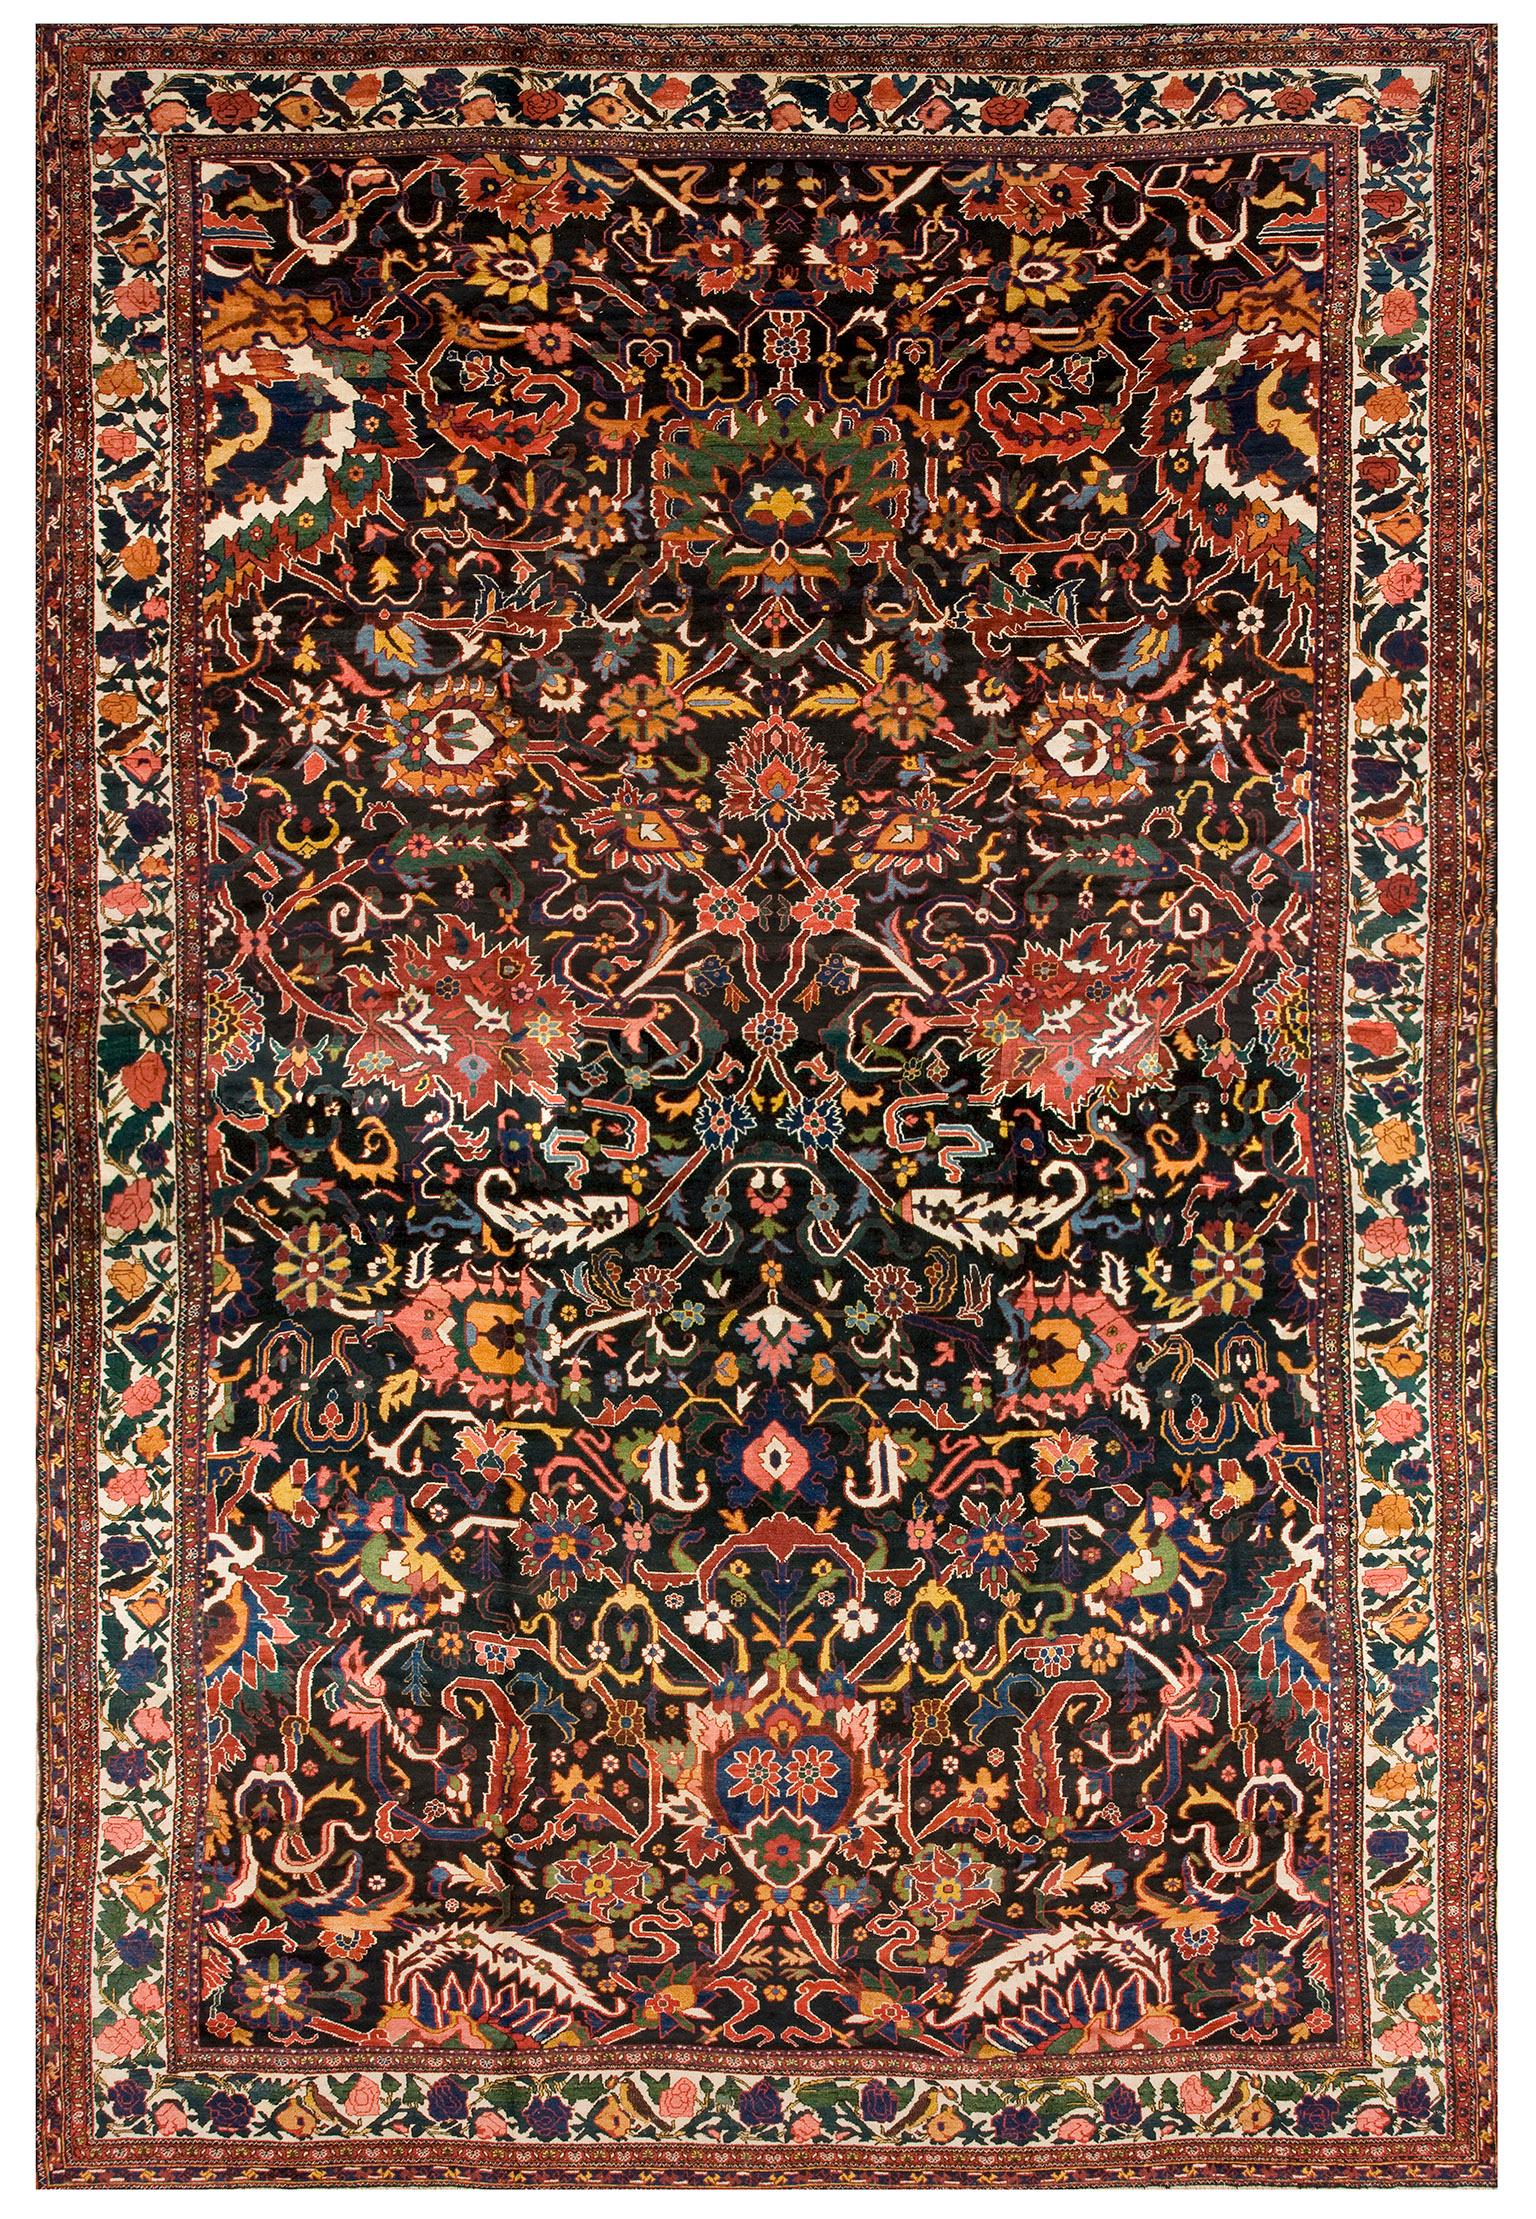 Early 20th Century Persian Bakhtiari Carpet ( 16' x 23' - 487 x 702 ) For Sale